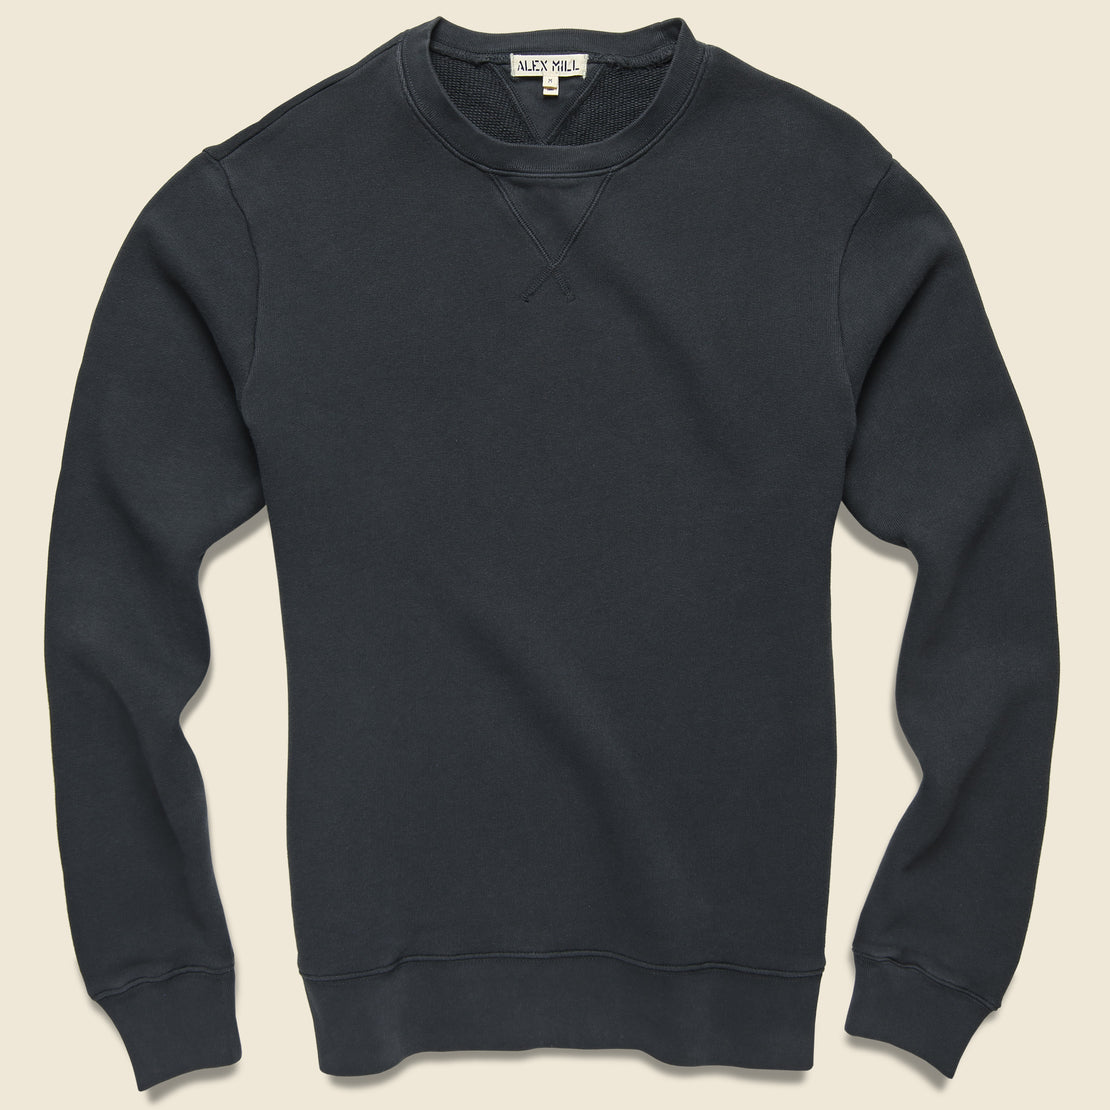 Alex Mill French Terry Crew Sweatshirt - Washed Black